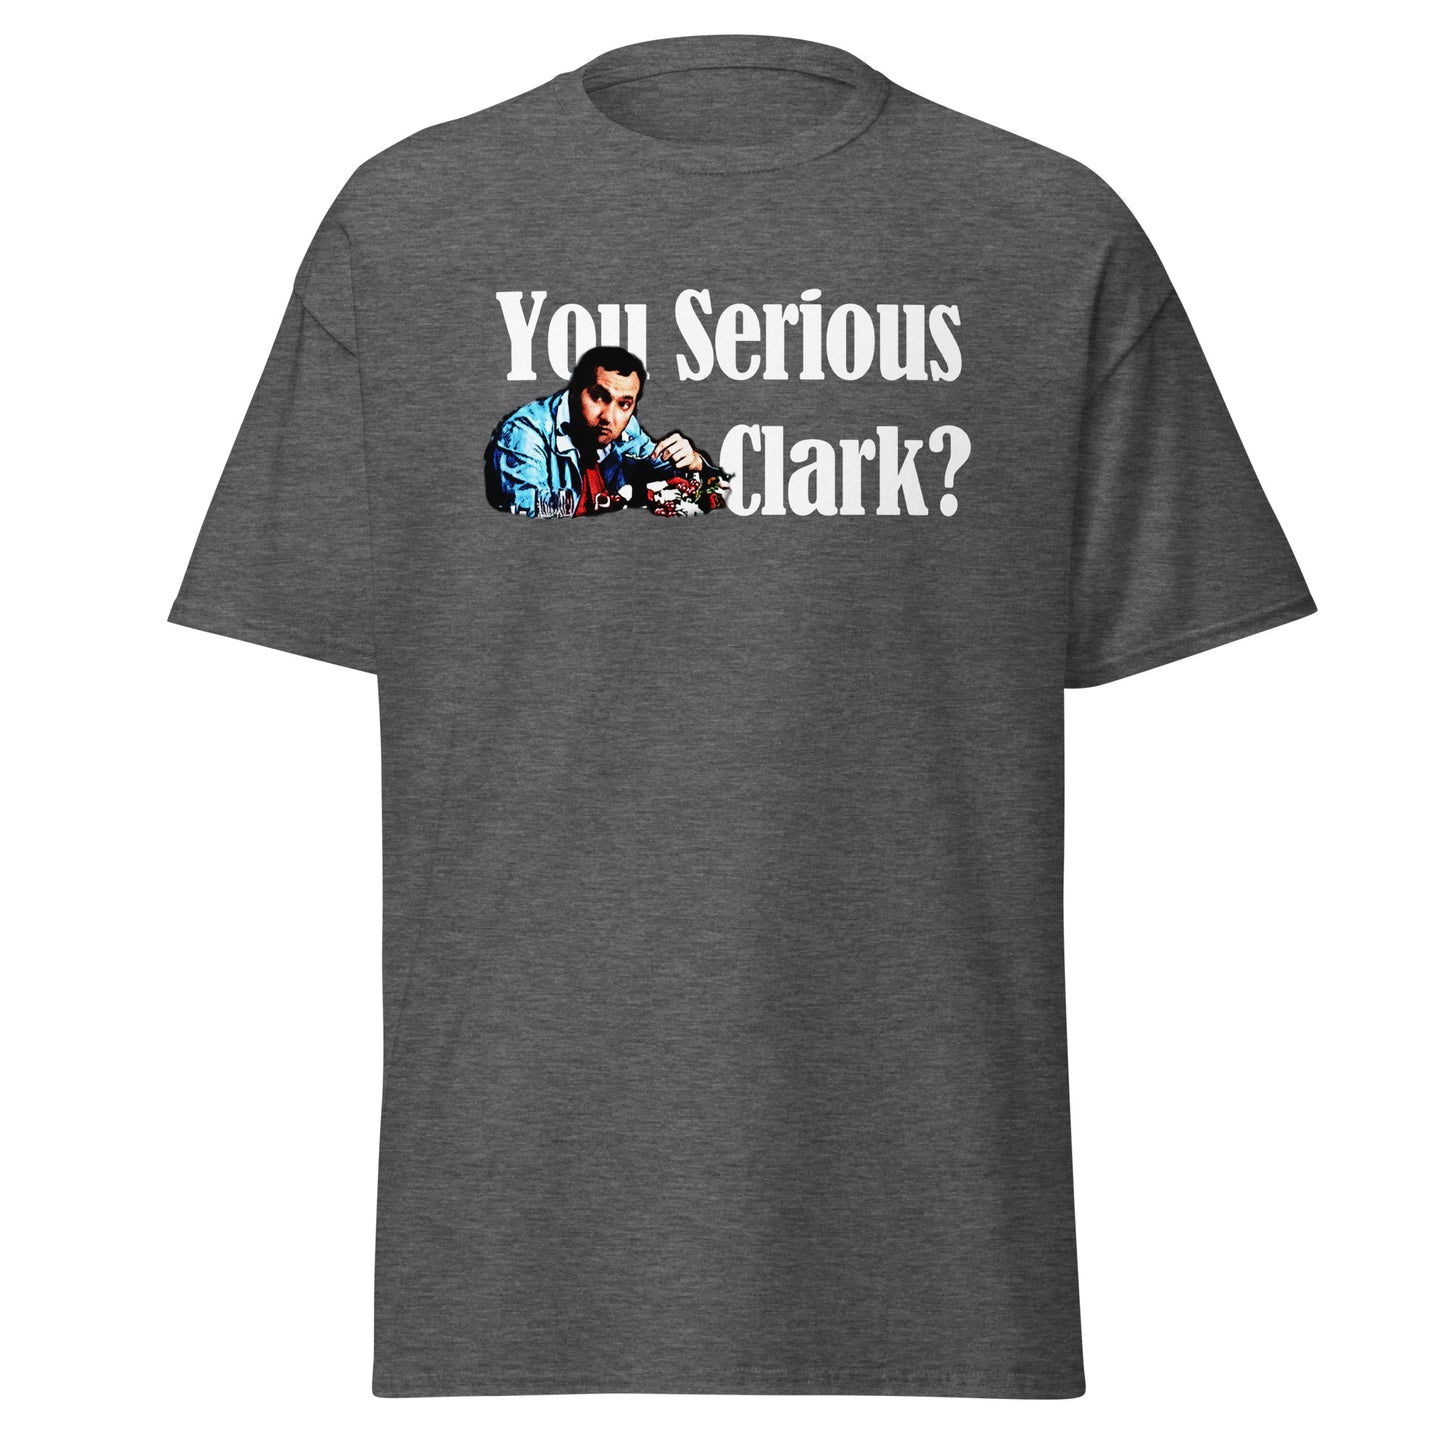 You Serious, Clark? T-Shirt - Classic Christmas Comedy